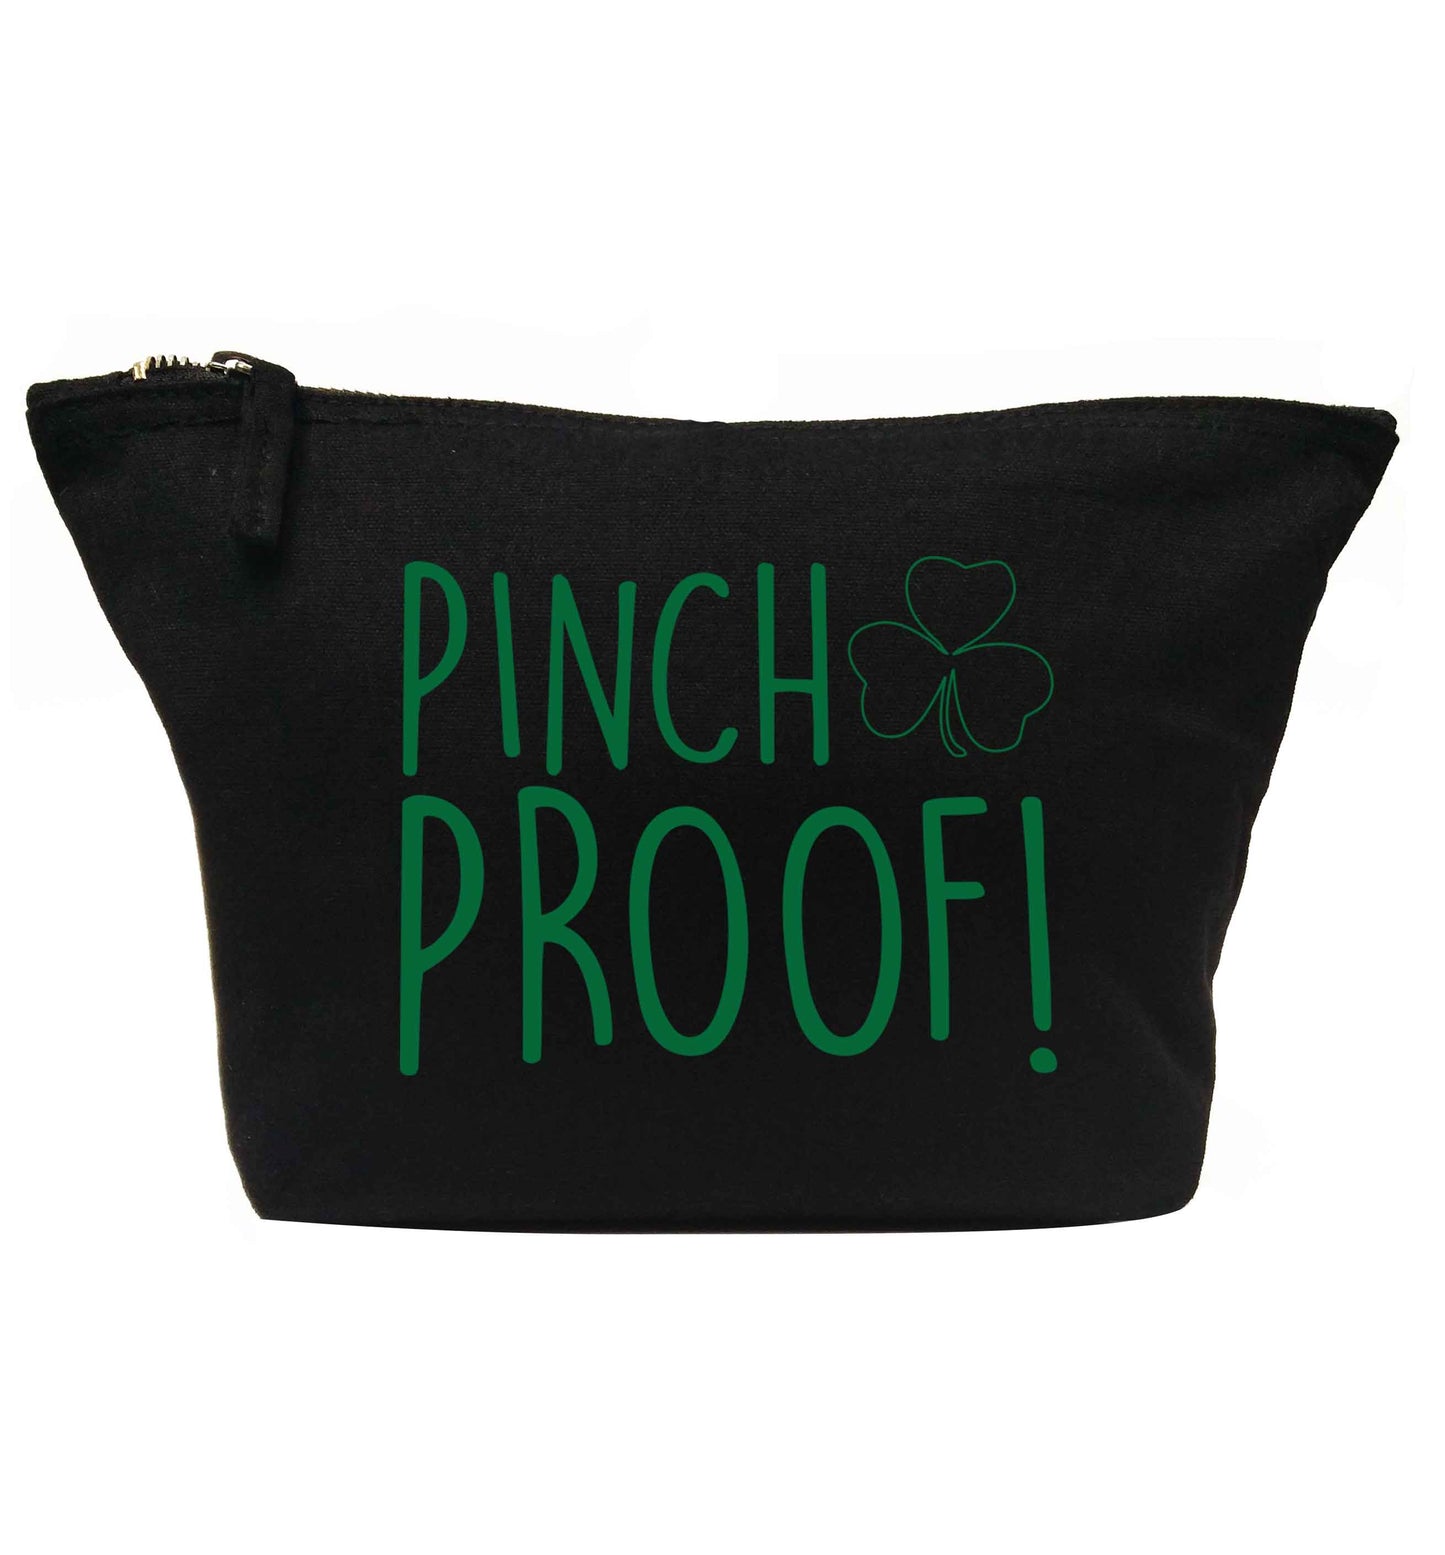 Pinch Proof | Makeup / wash bag